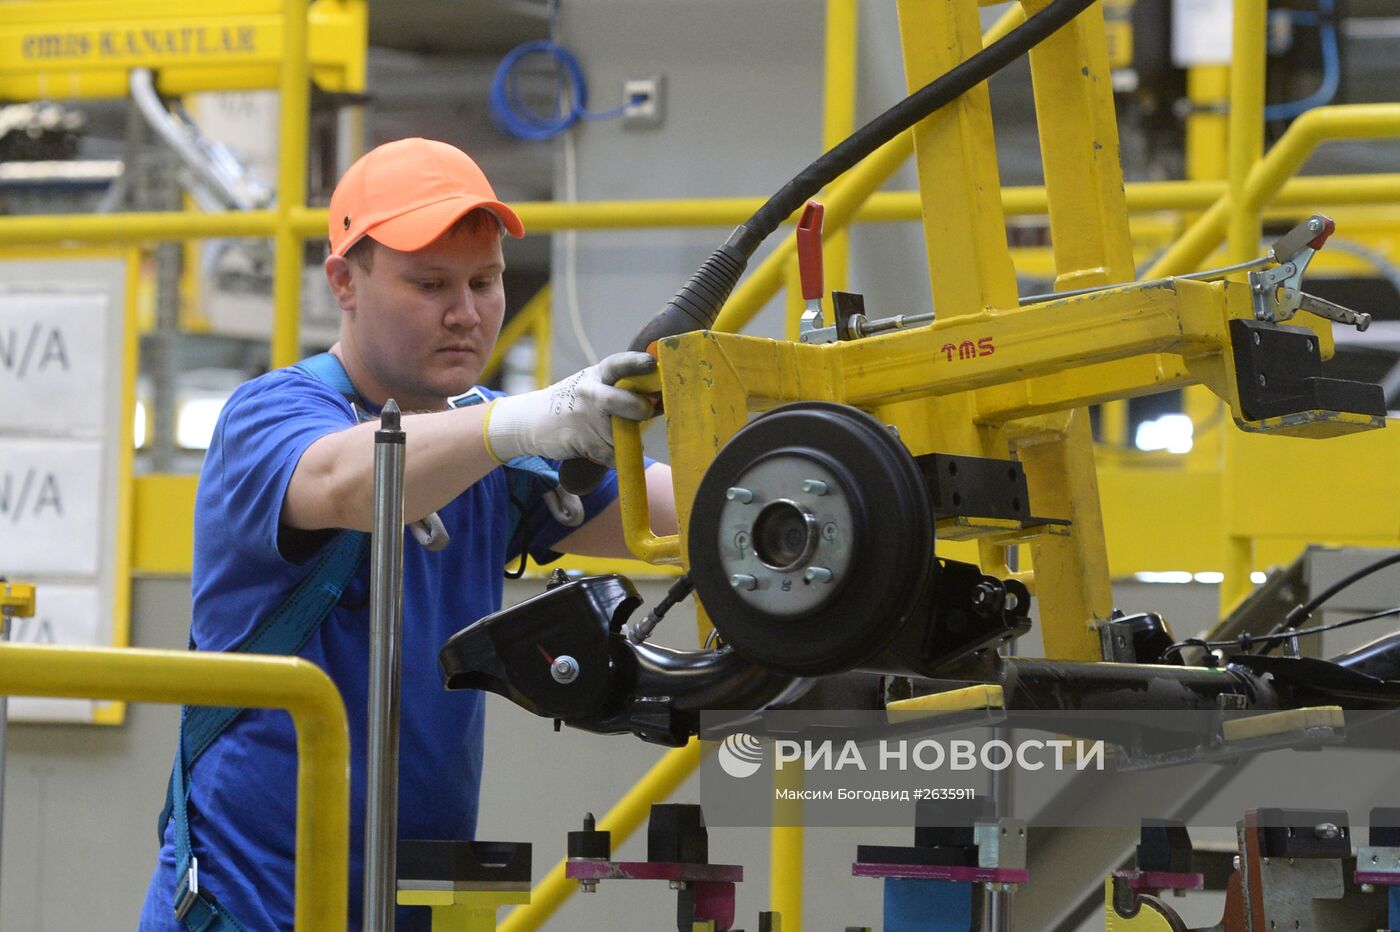 Запуск производства автомобиля Ford Fiesta на заводе Ford Sollers в Набережных Челнах